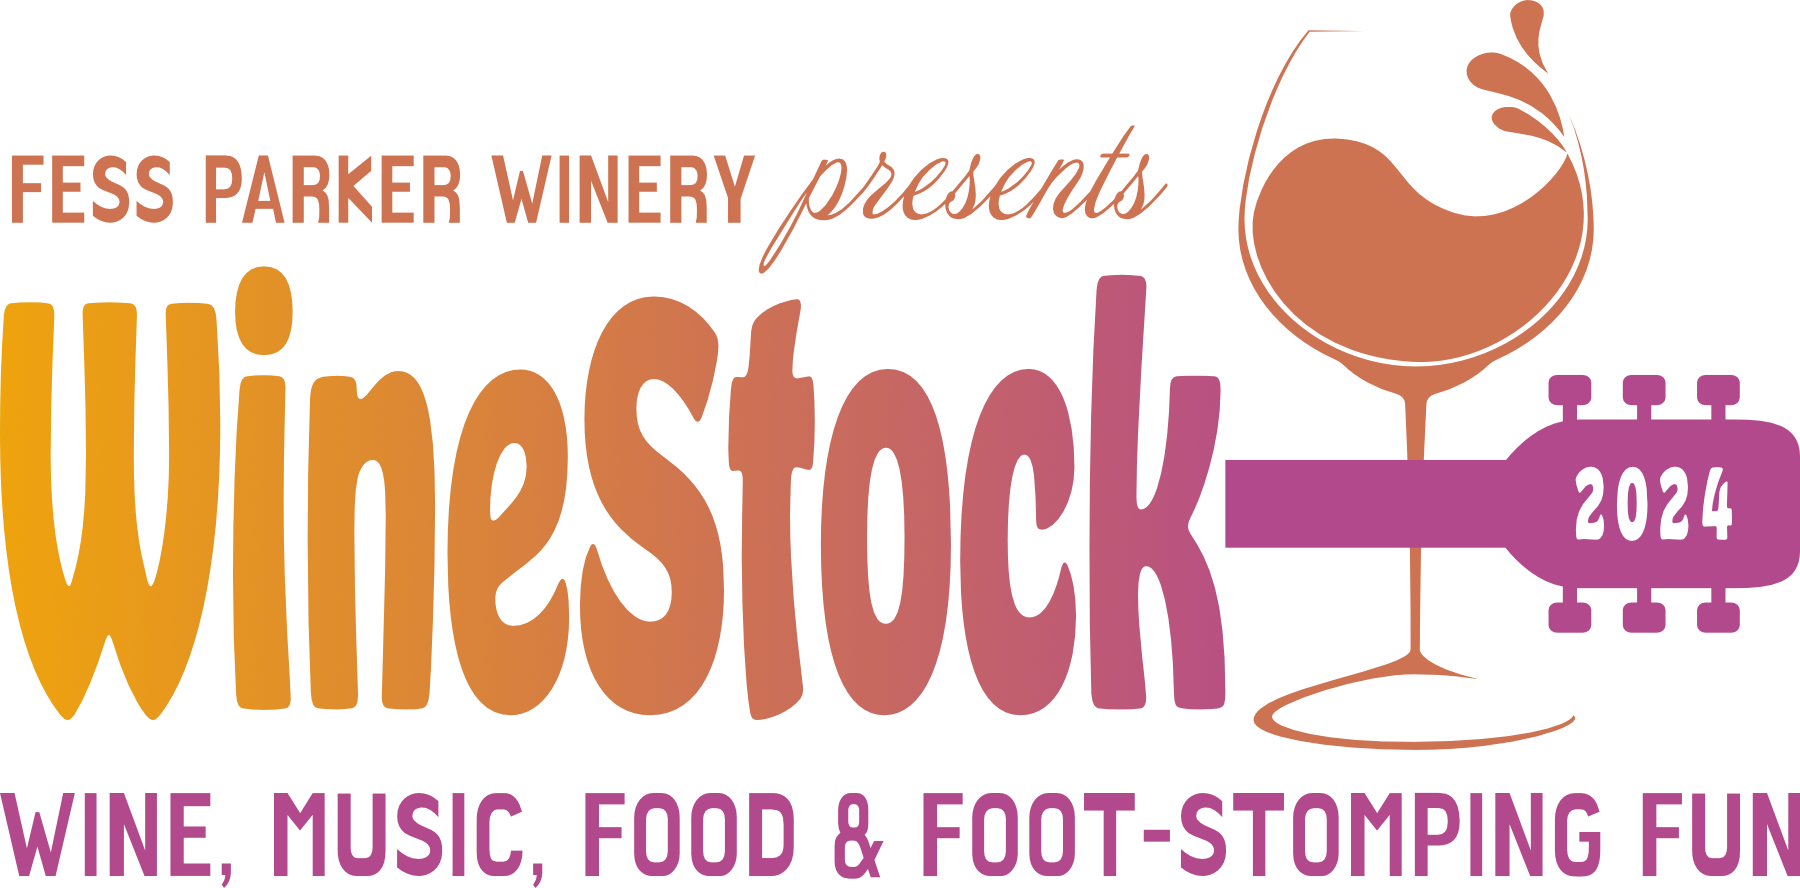 Fess Parker Winery Presents WineStock 2024